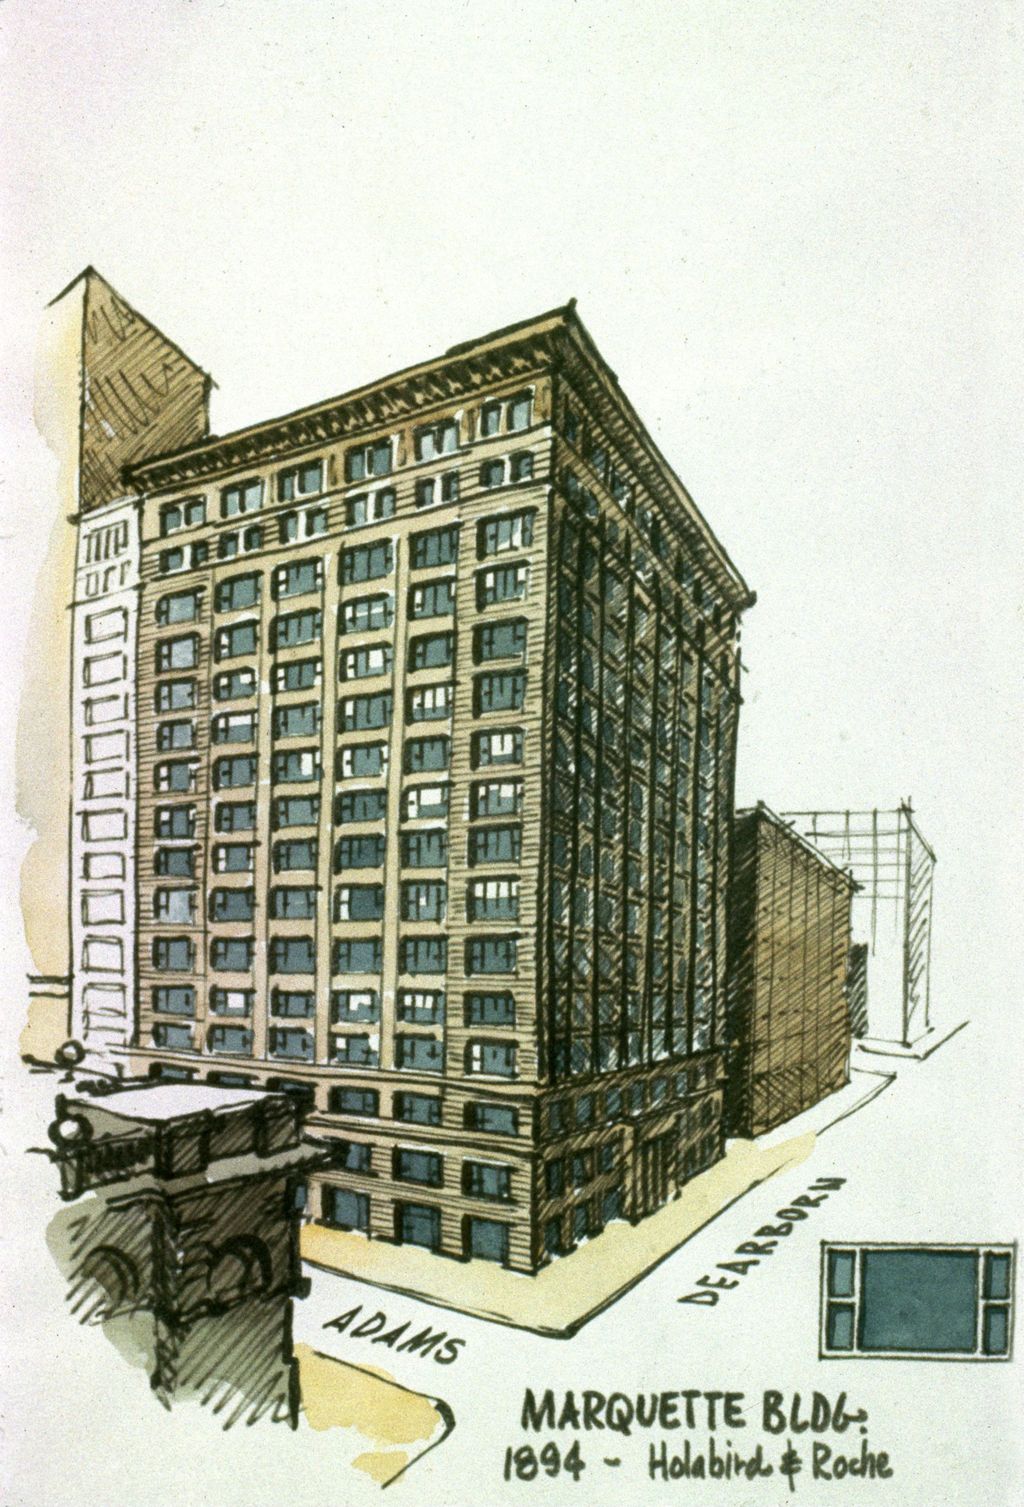 Miniature of Marquette Building